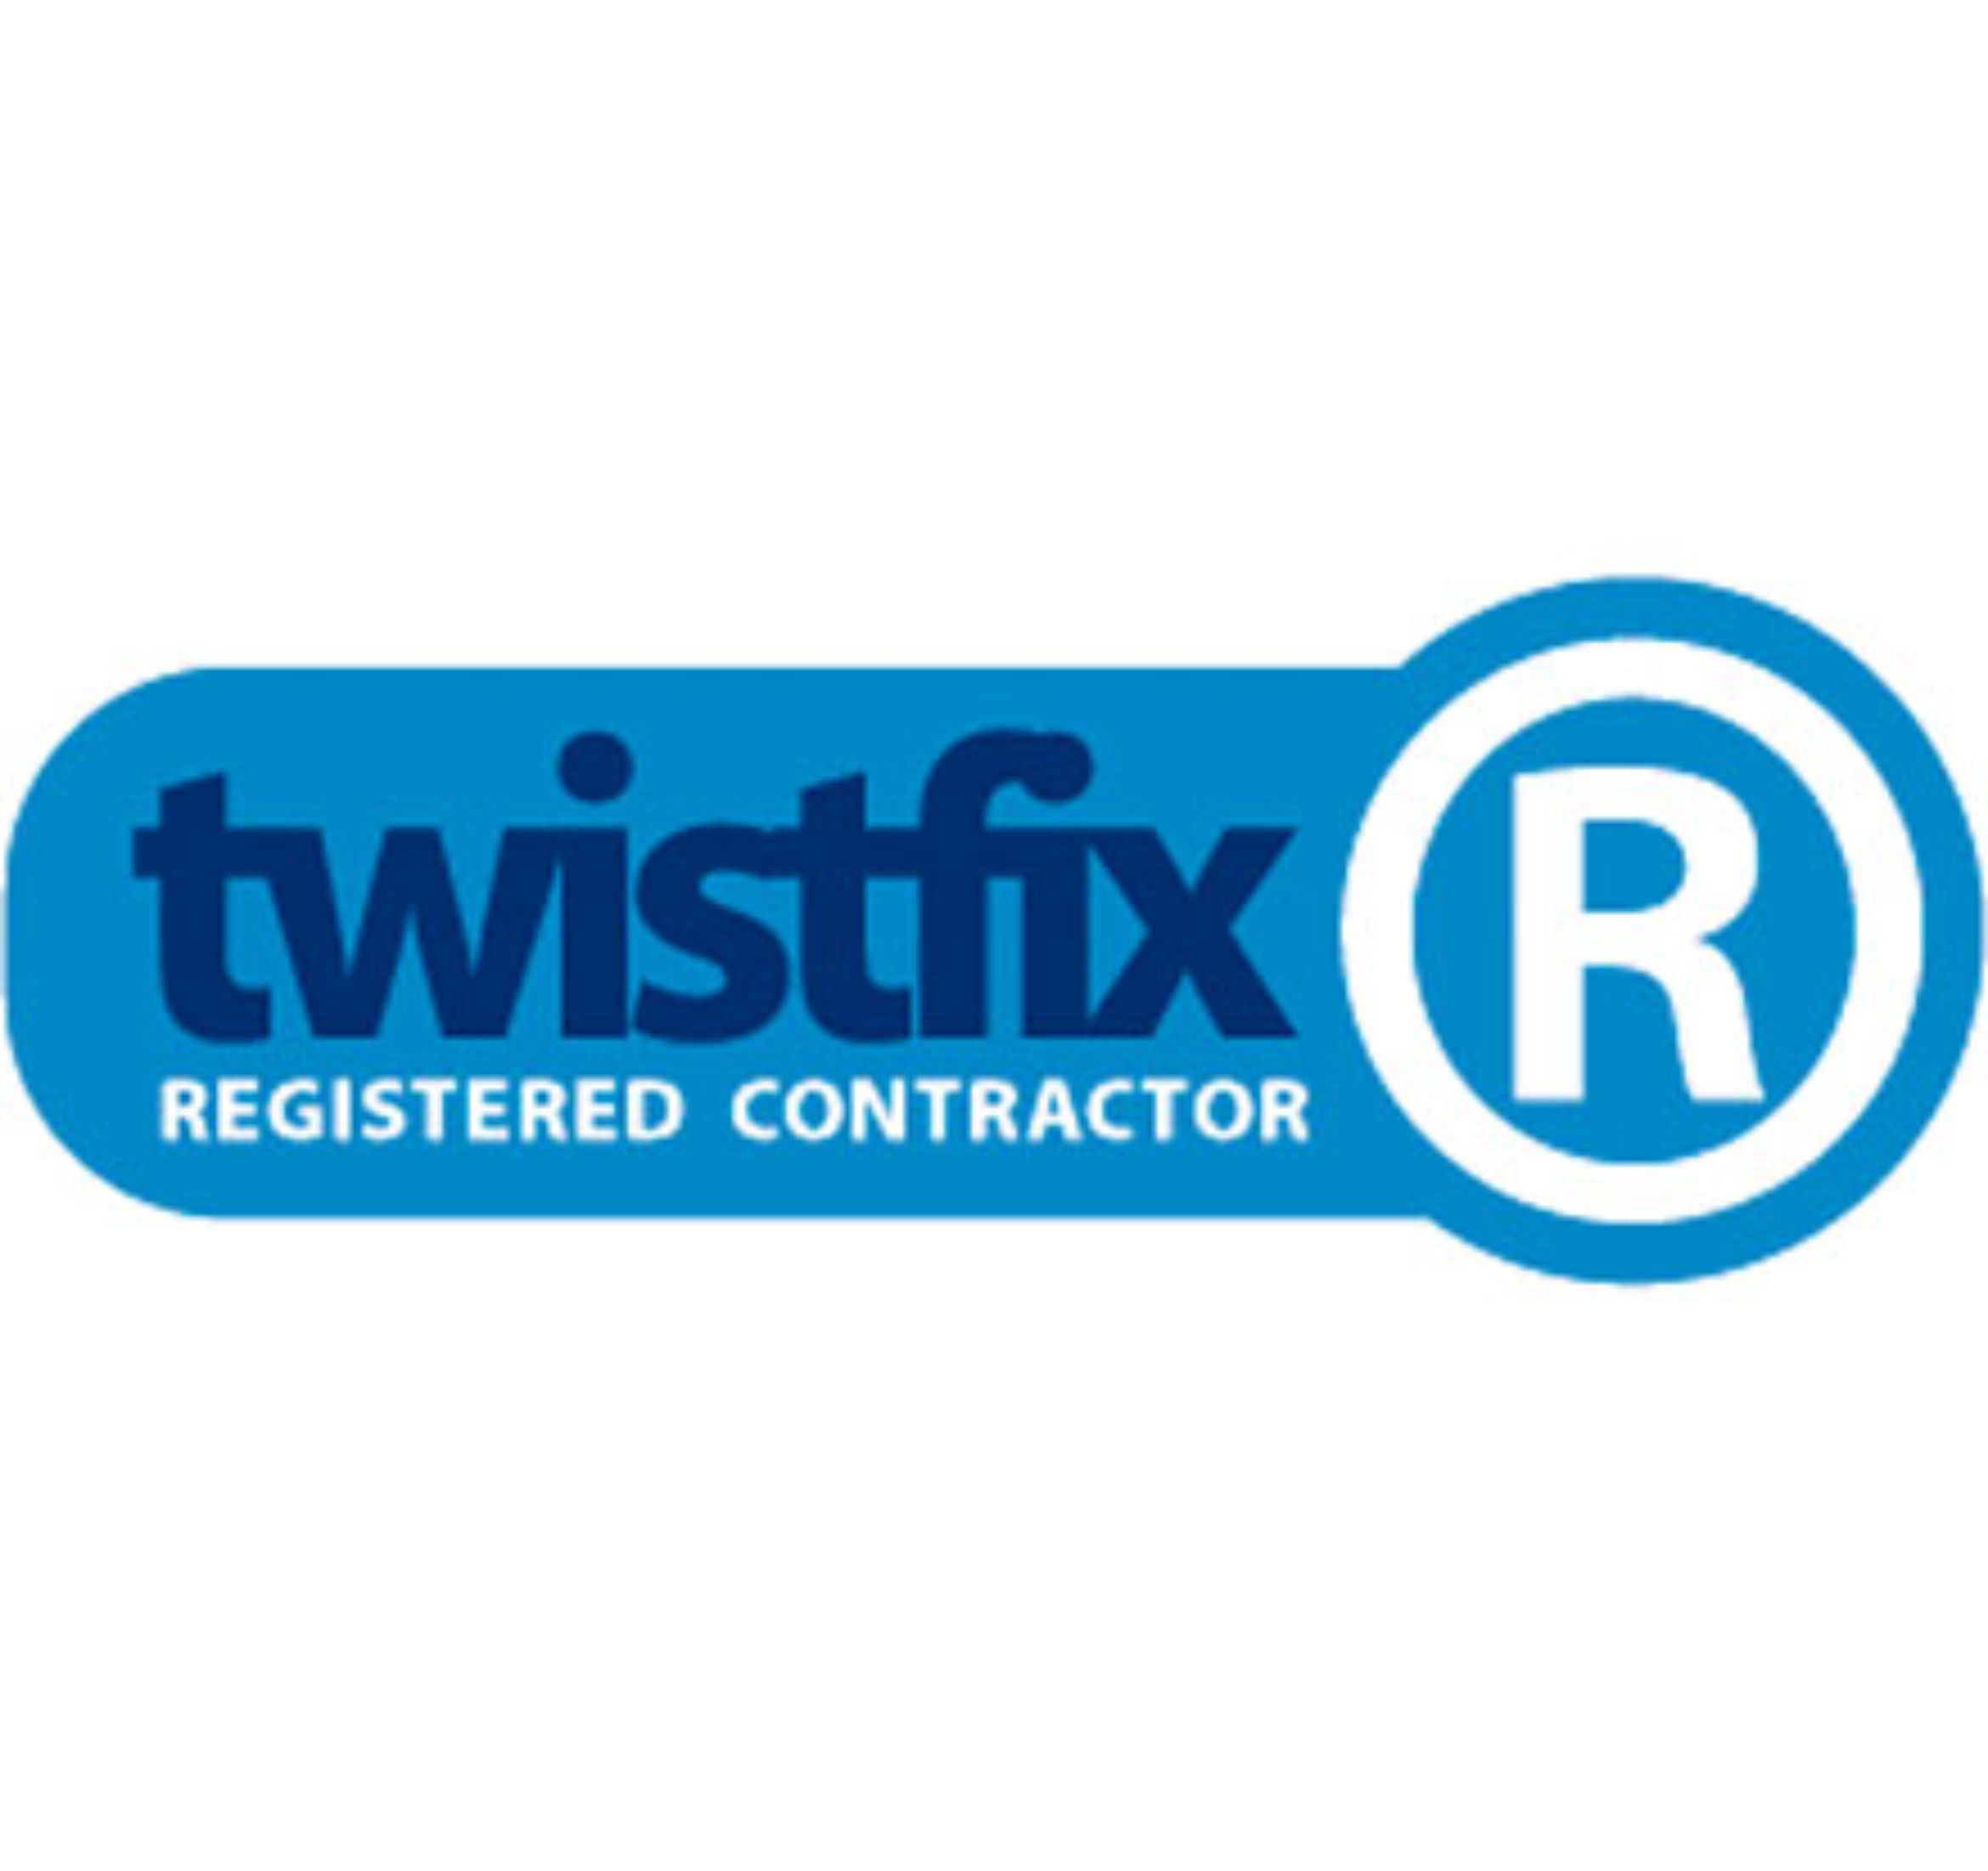 registered contractor logo